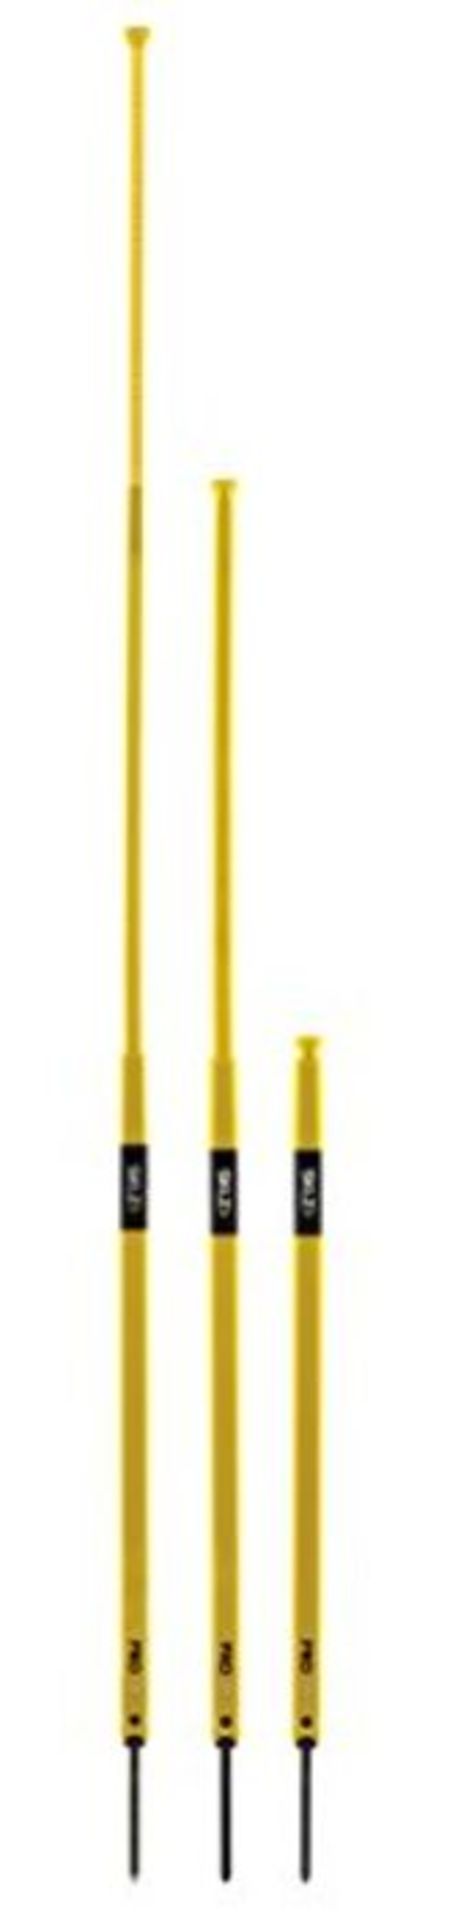 RRP £50.00 Sklz Pro Agility Training Poles - Yellow